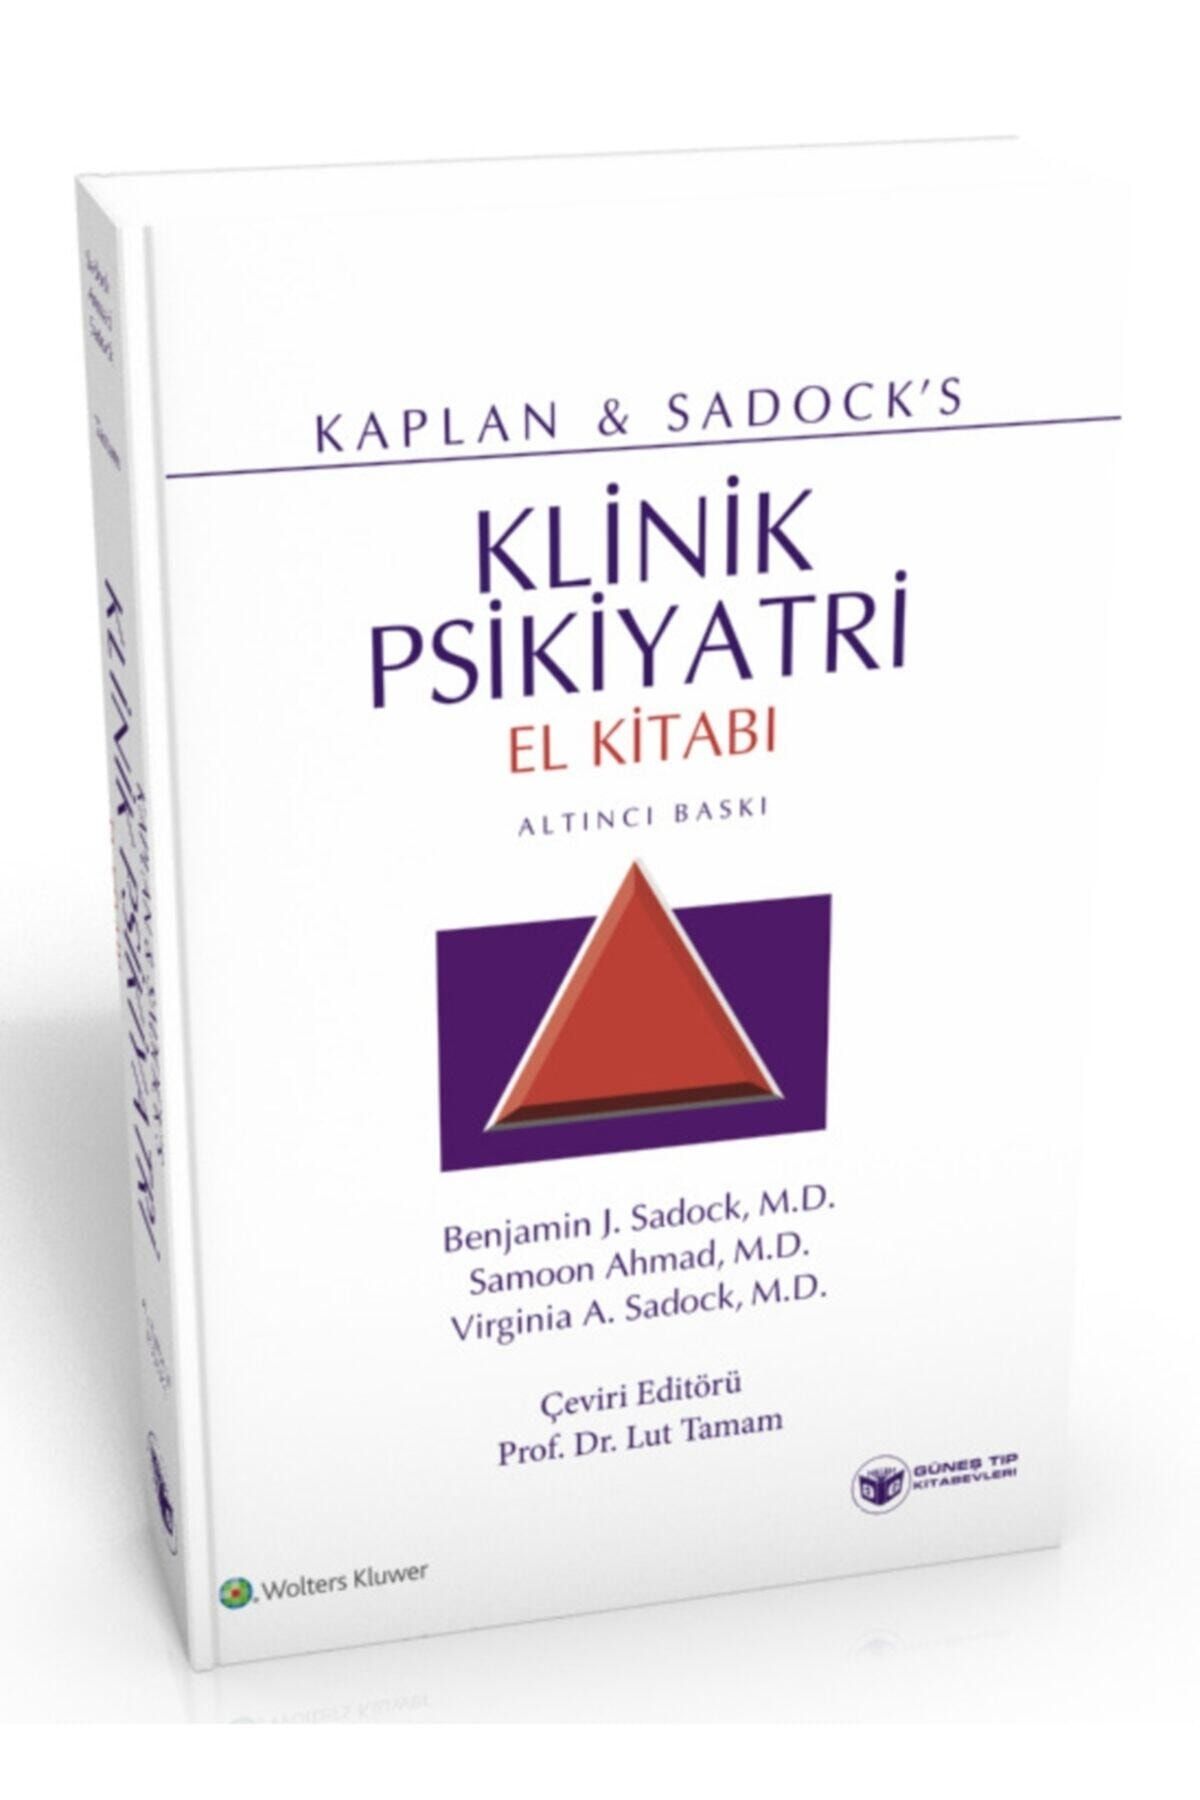 Güneş Tıp Kitabevi Kaplan & Sadock's Klinik Psikiyatri El Kitabı - Çeviri Editörü Prof. Dr. Lut Tamam, 2020